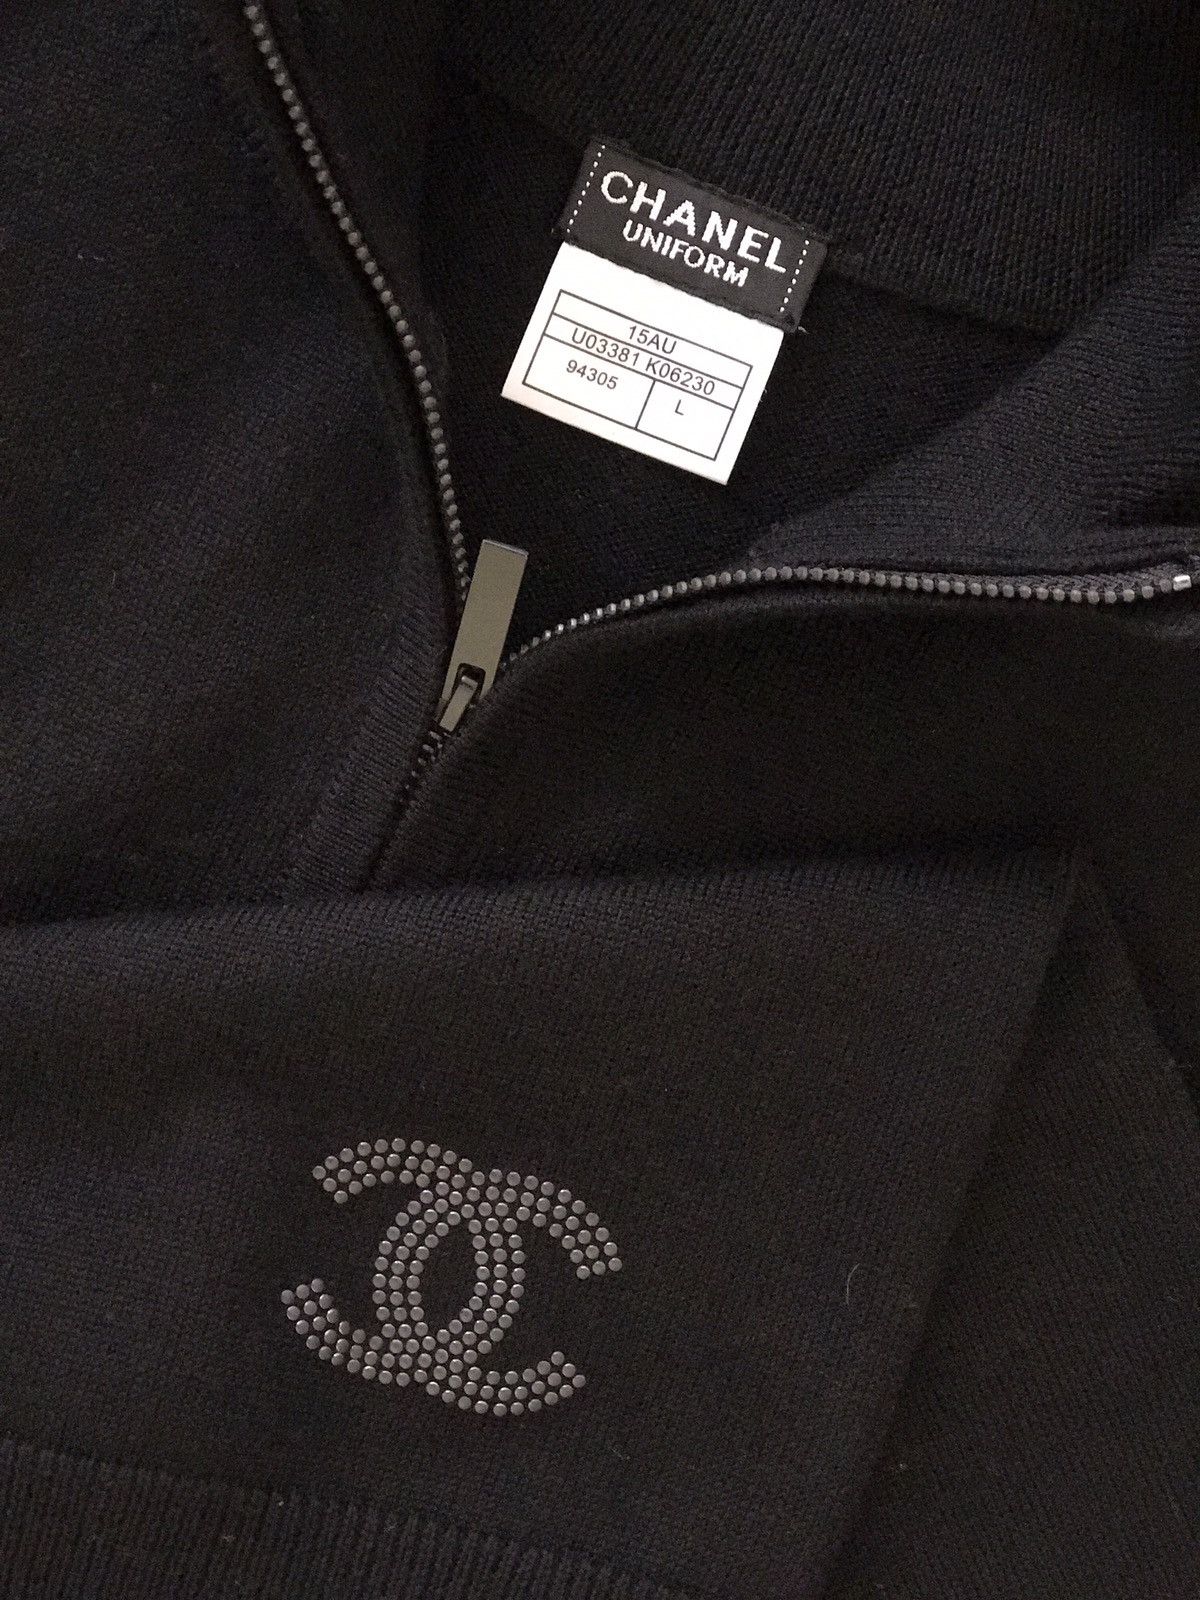 Chanel Men's Chanel Sweater Size US L / EU 52-54 / 3 - 6 Preview